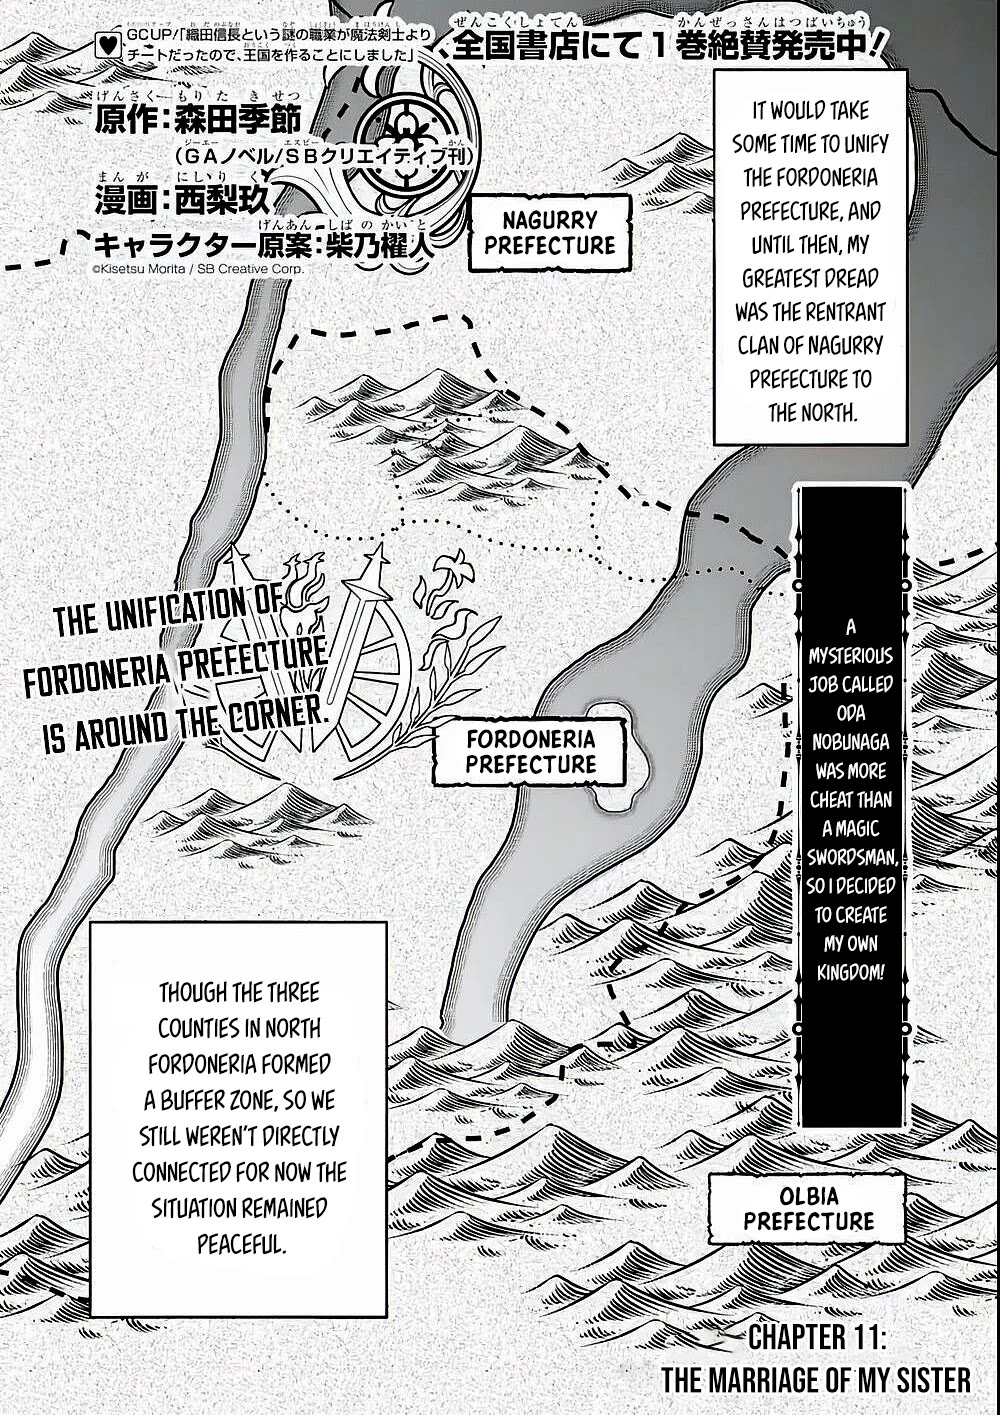 Mysterious Job Called Oda Nobunaga - Page 1